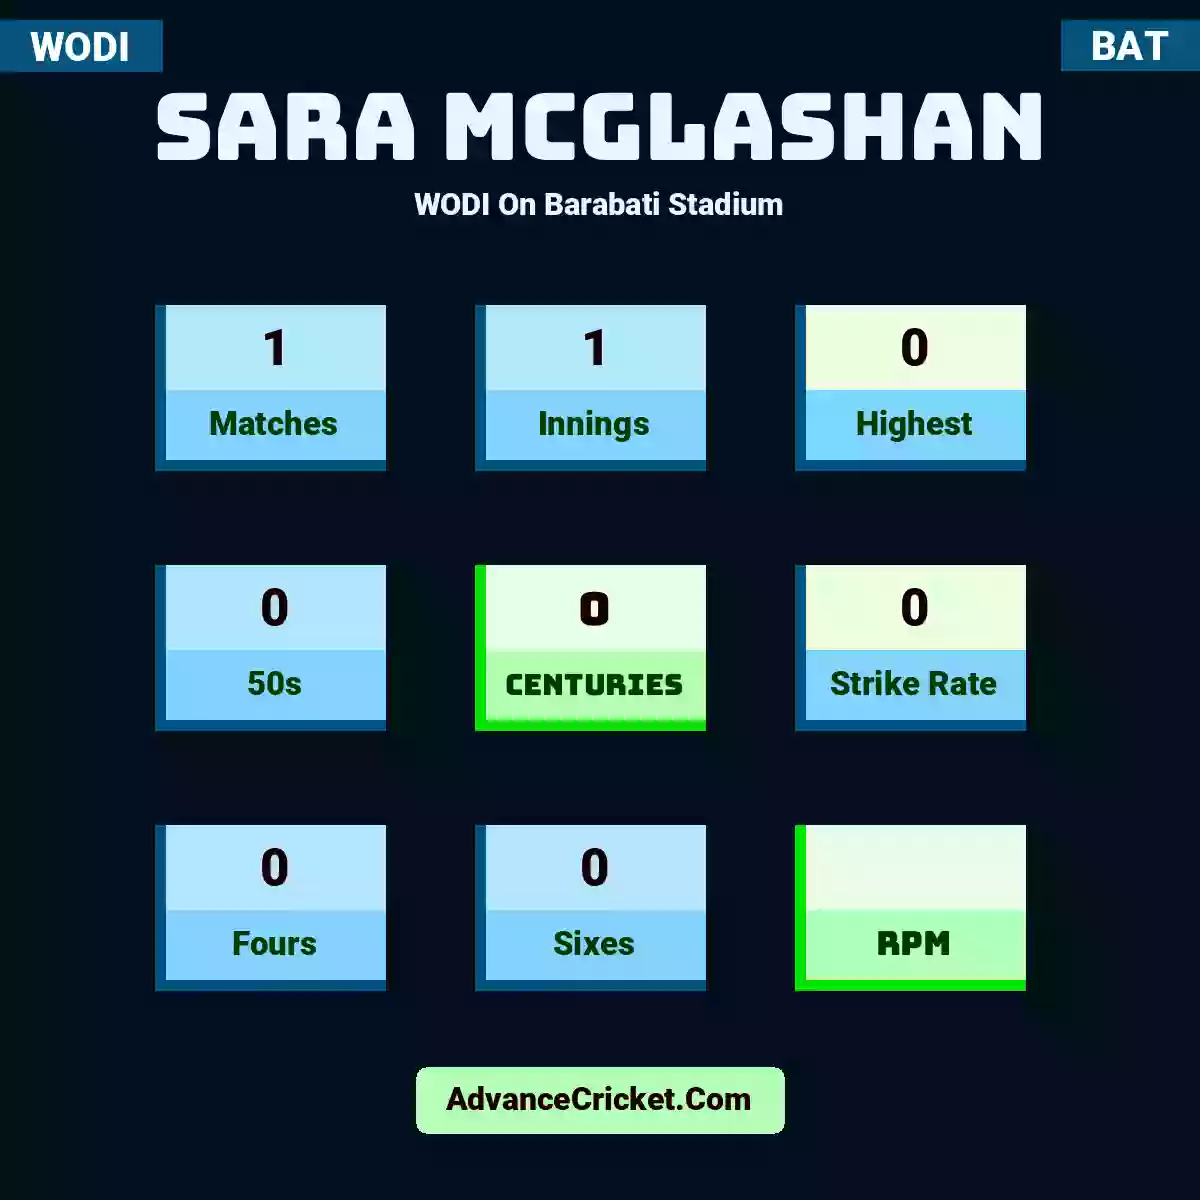 Sara McGlashan WODI  On Barabati Stadium, Sara McGlashan played 1 matches, scored 0 runs as highest, 0 half-centuries, and 0 centuries, with a strike rate of 0. S.McGlashan hit 0 fours and 0 sixes.